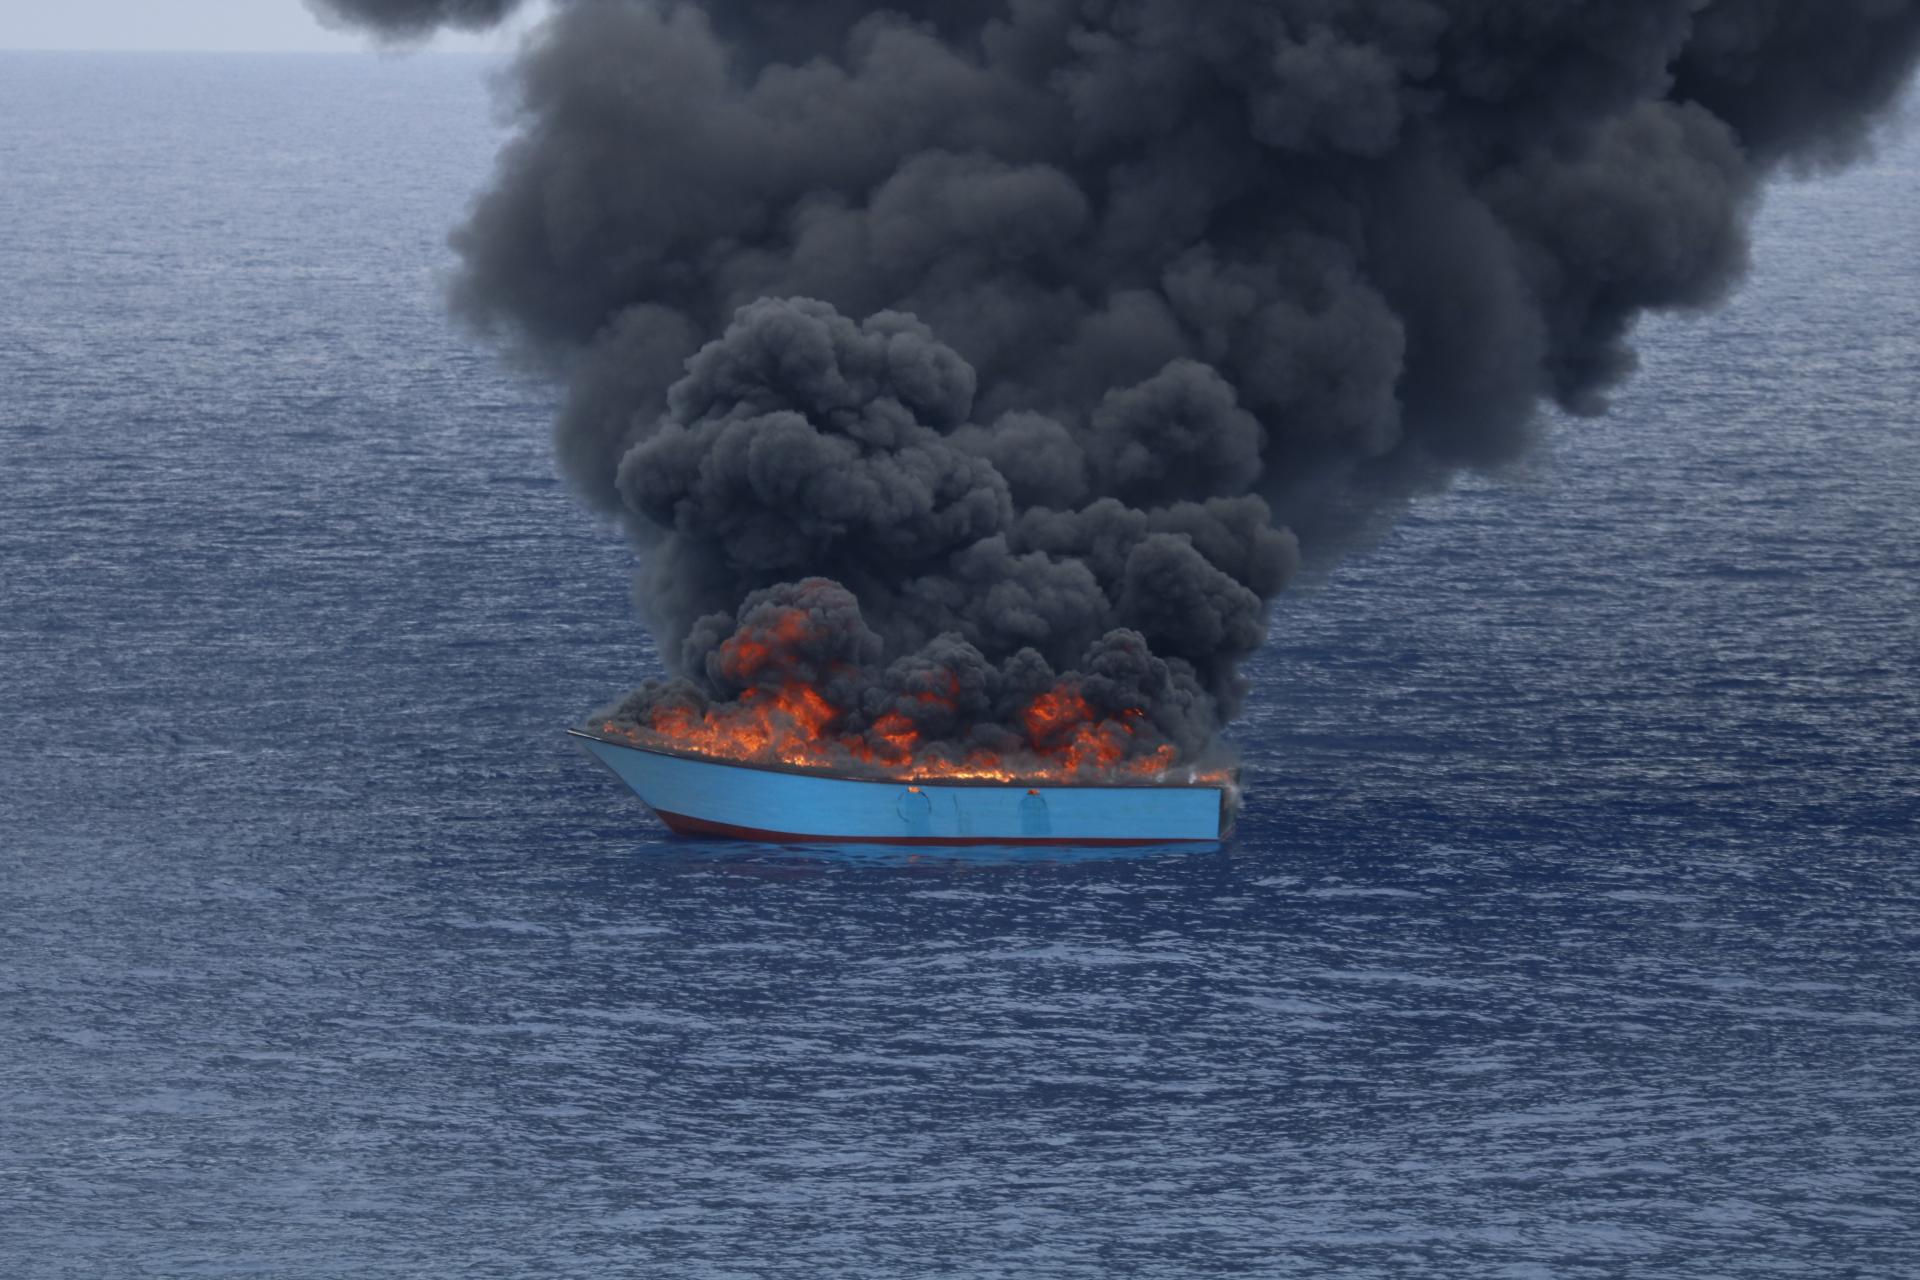 MSF_Search and Rescue_ Central Mediterranean Sea crisis - Migrant boat set on fire